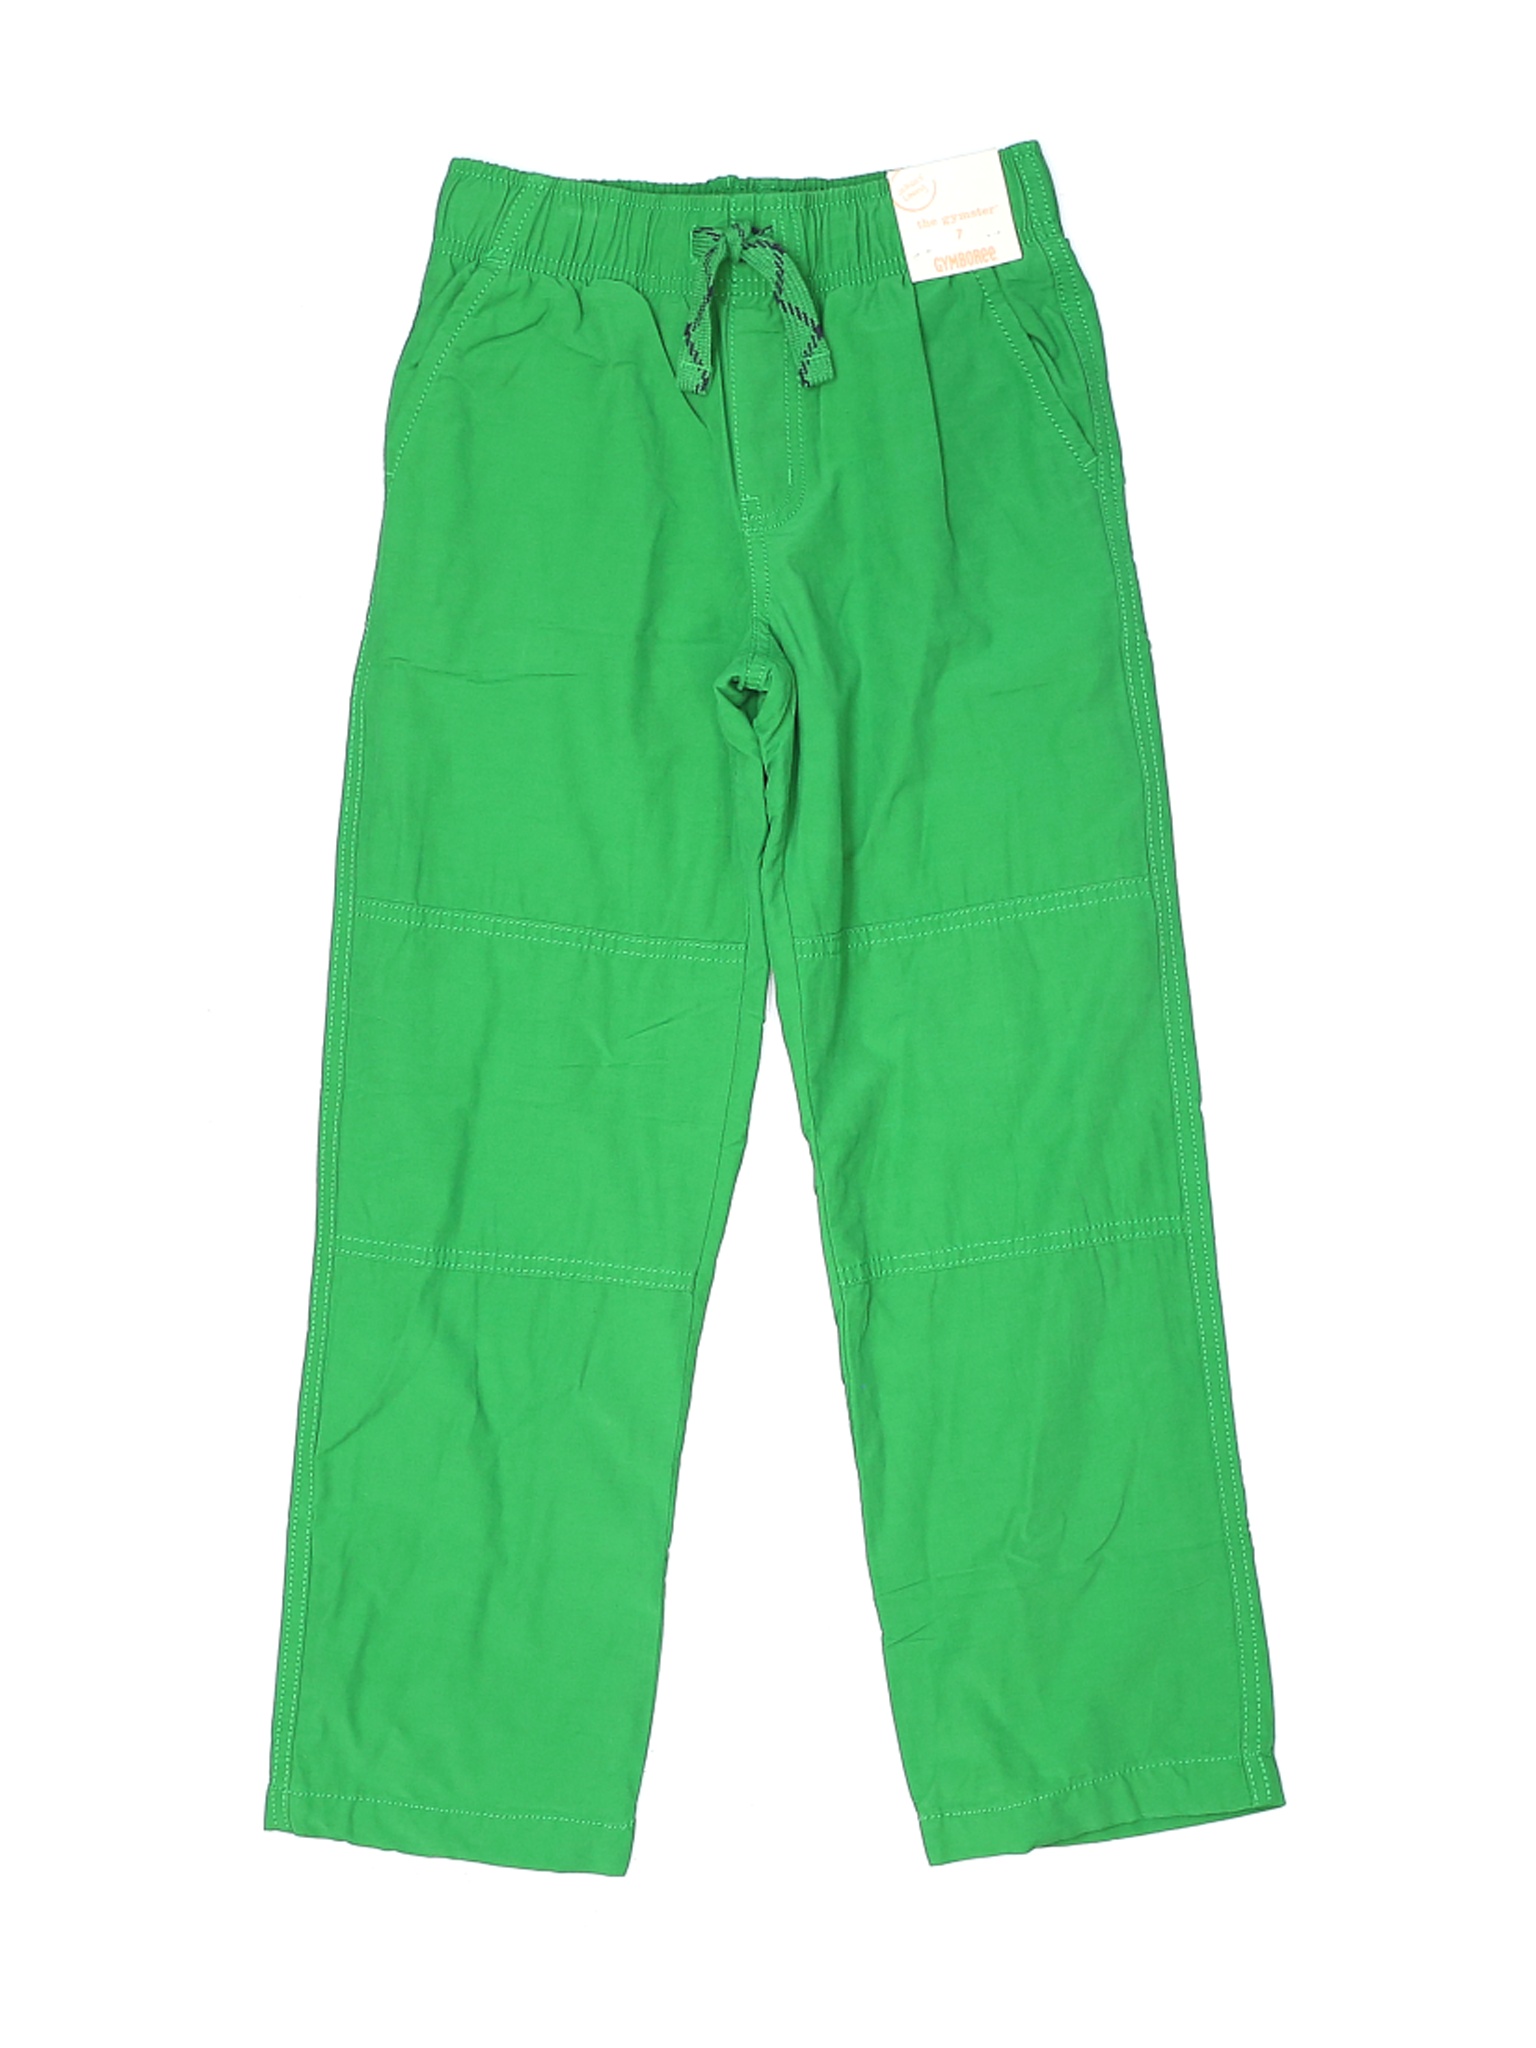 NWT Gymboree Boys Green Casual Pants 7 | eBay